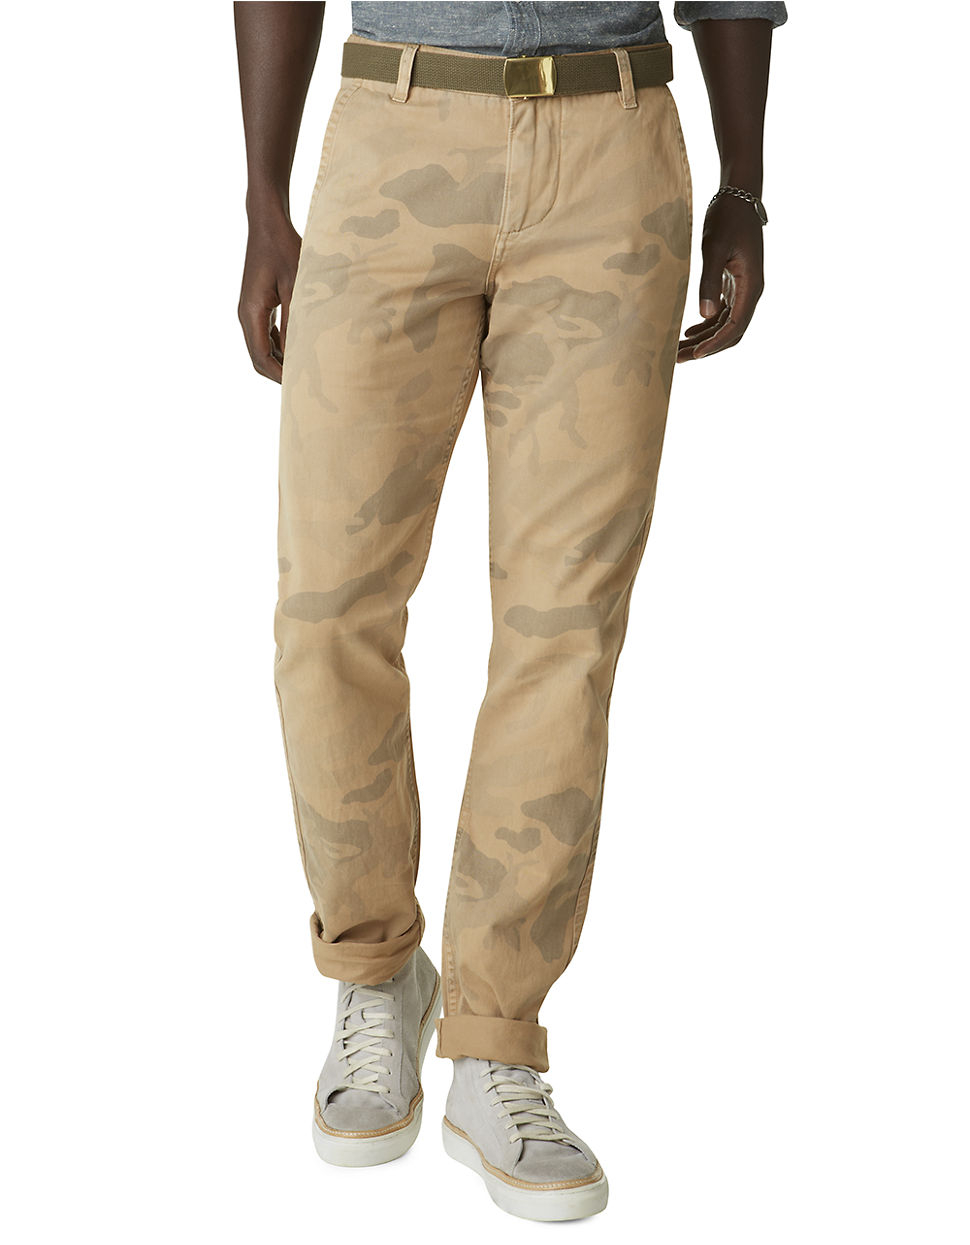 Lyst - Dockers D1 Camo Print Slim Alpha Pants in Brown for Men